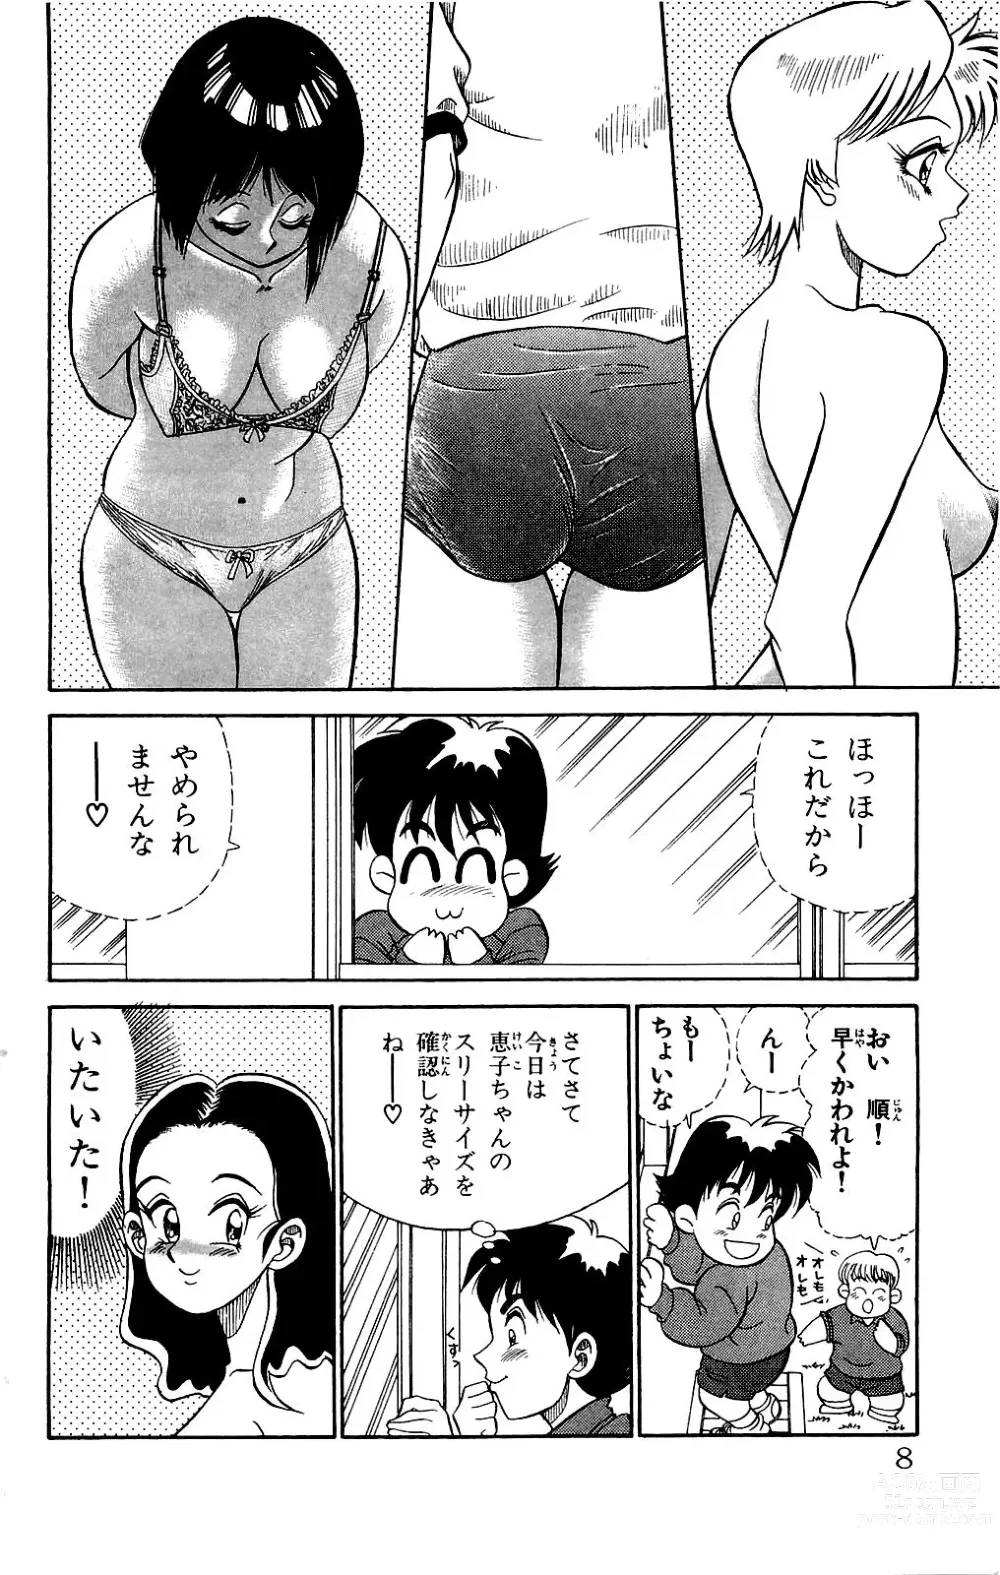 Page 6 of manga Orette Piyoritan Vol. 1